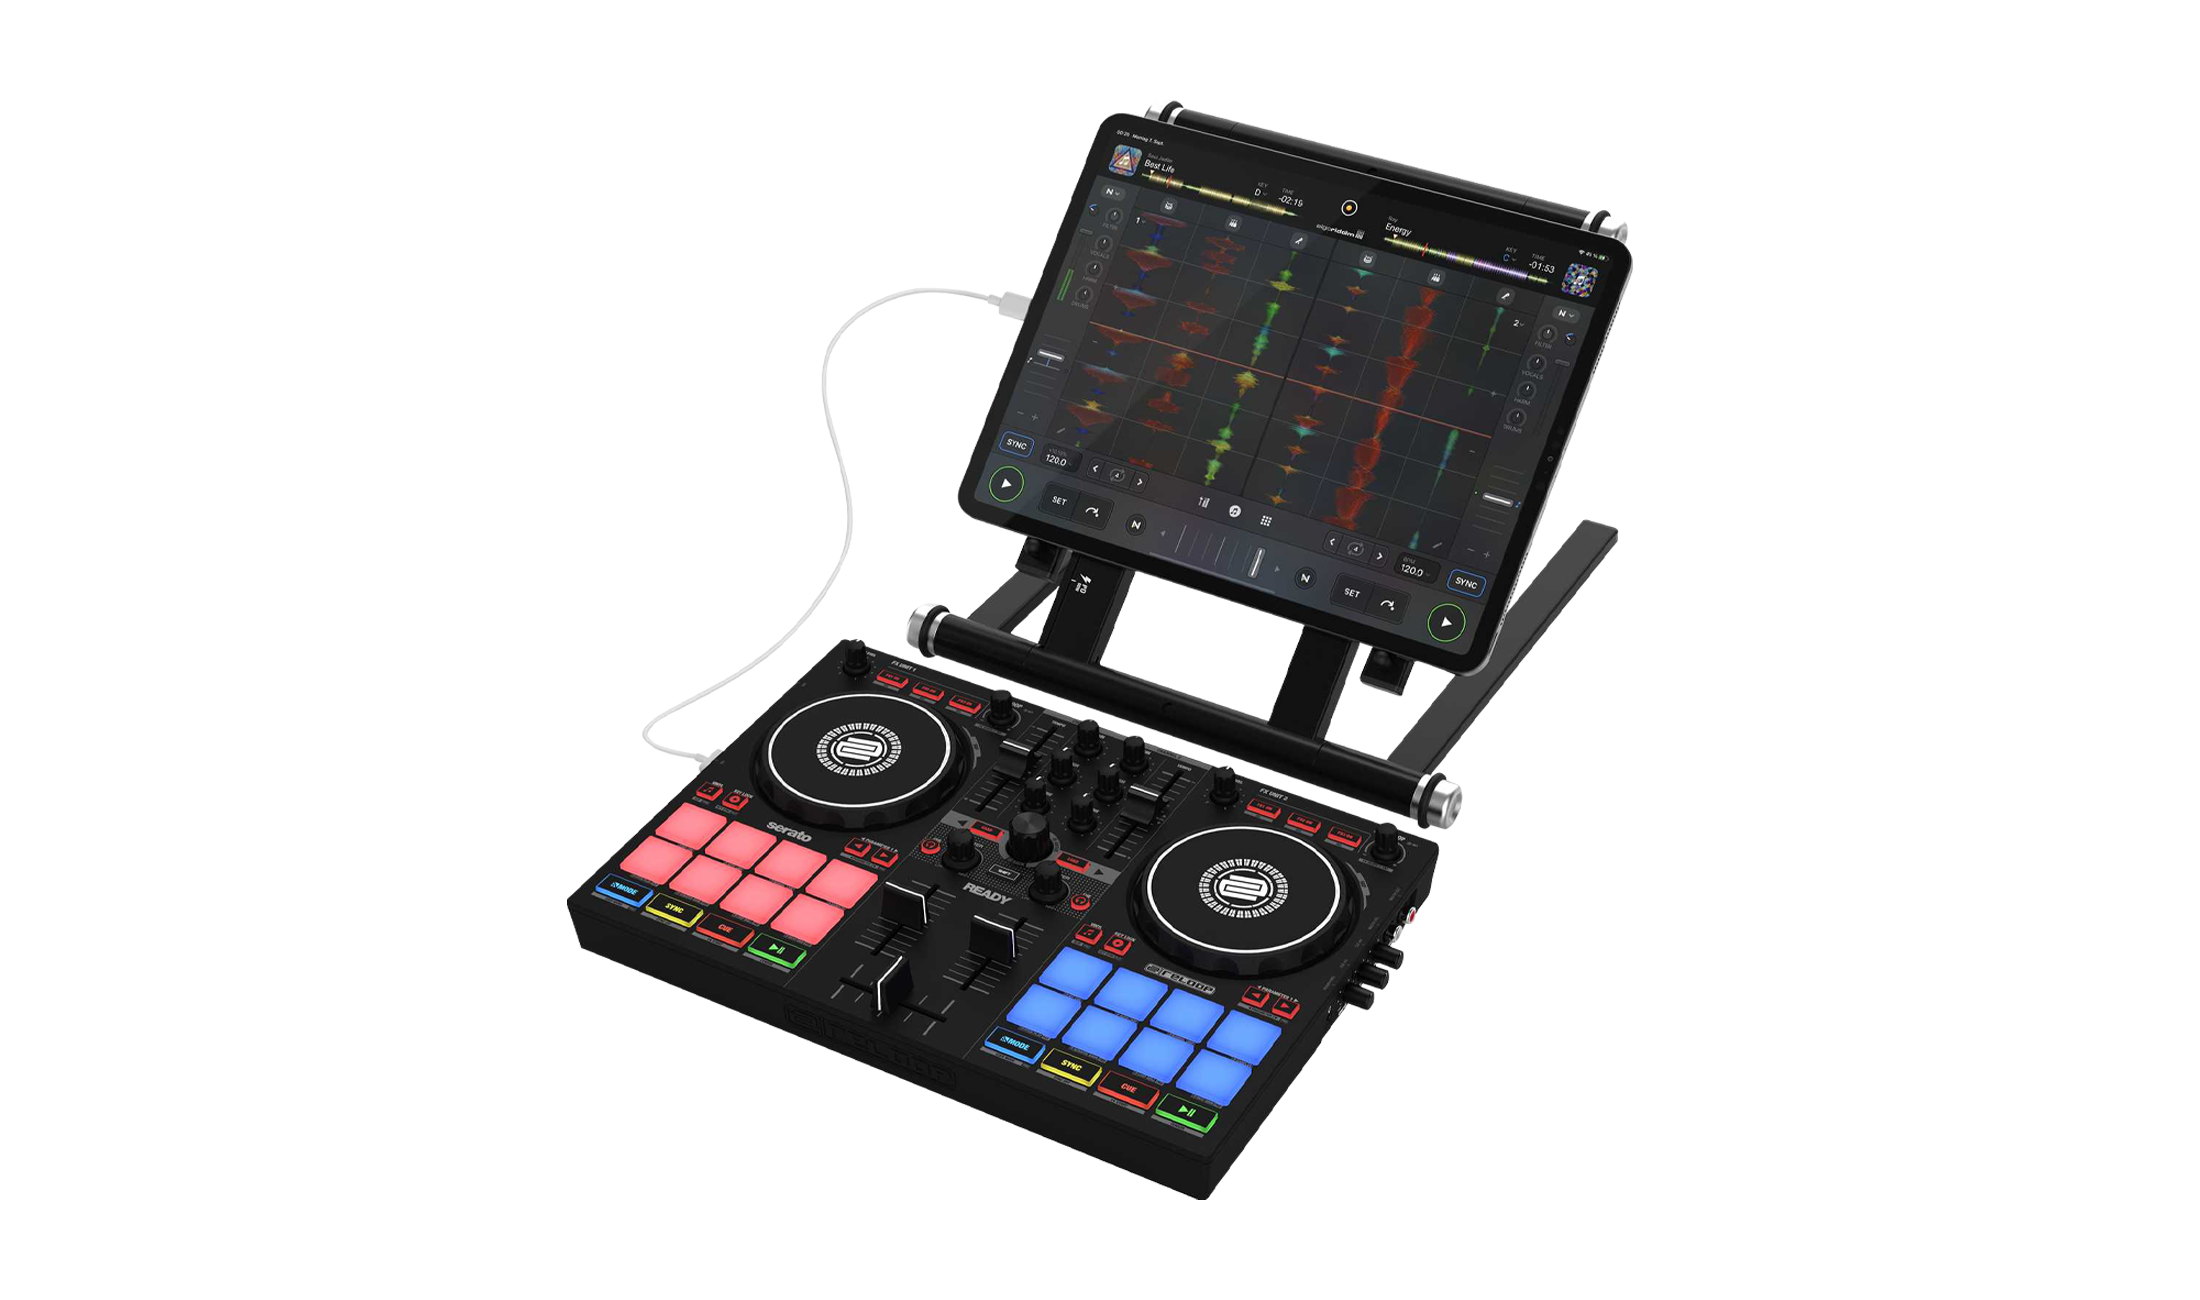 Test: Reloop Ready / portabler DJ-Controller